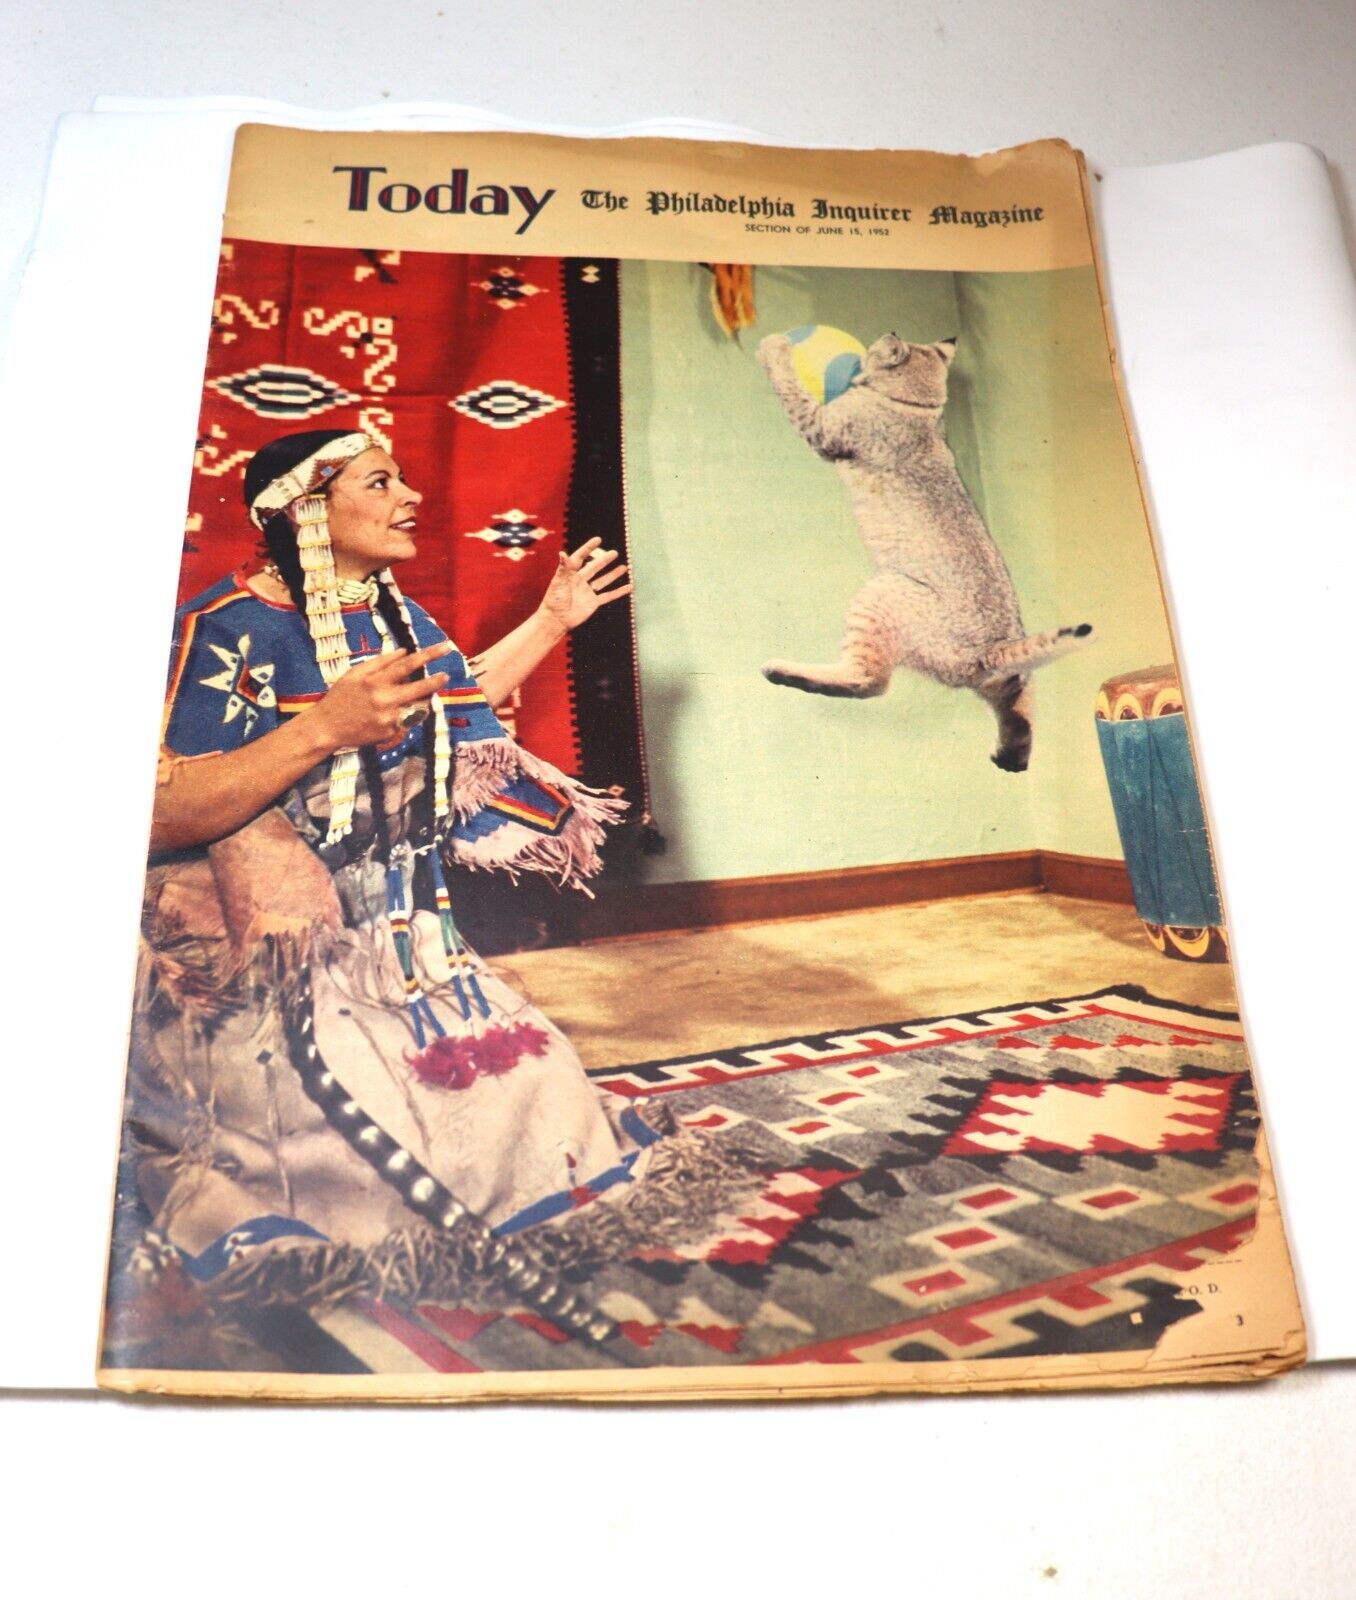 6/15/1952 Philadelphia Inquirer Magazine Today Sunday Newspaper Insert Lynx Pet